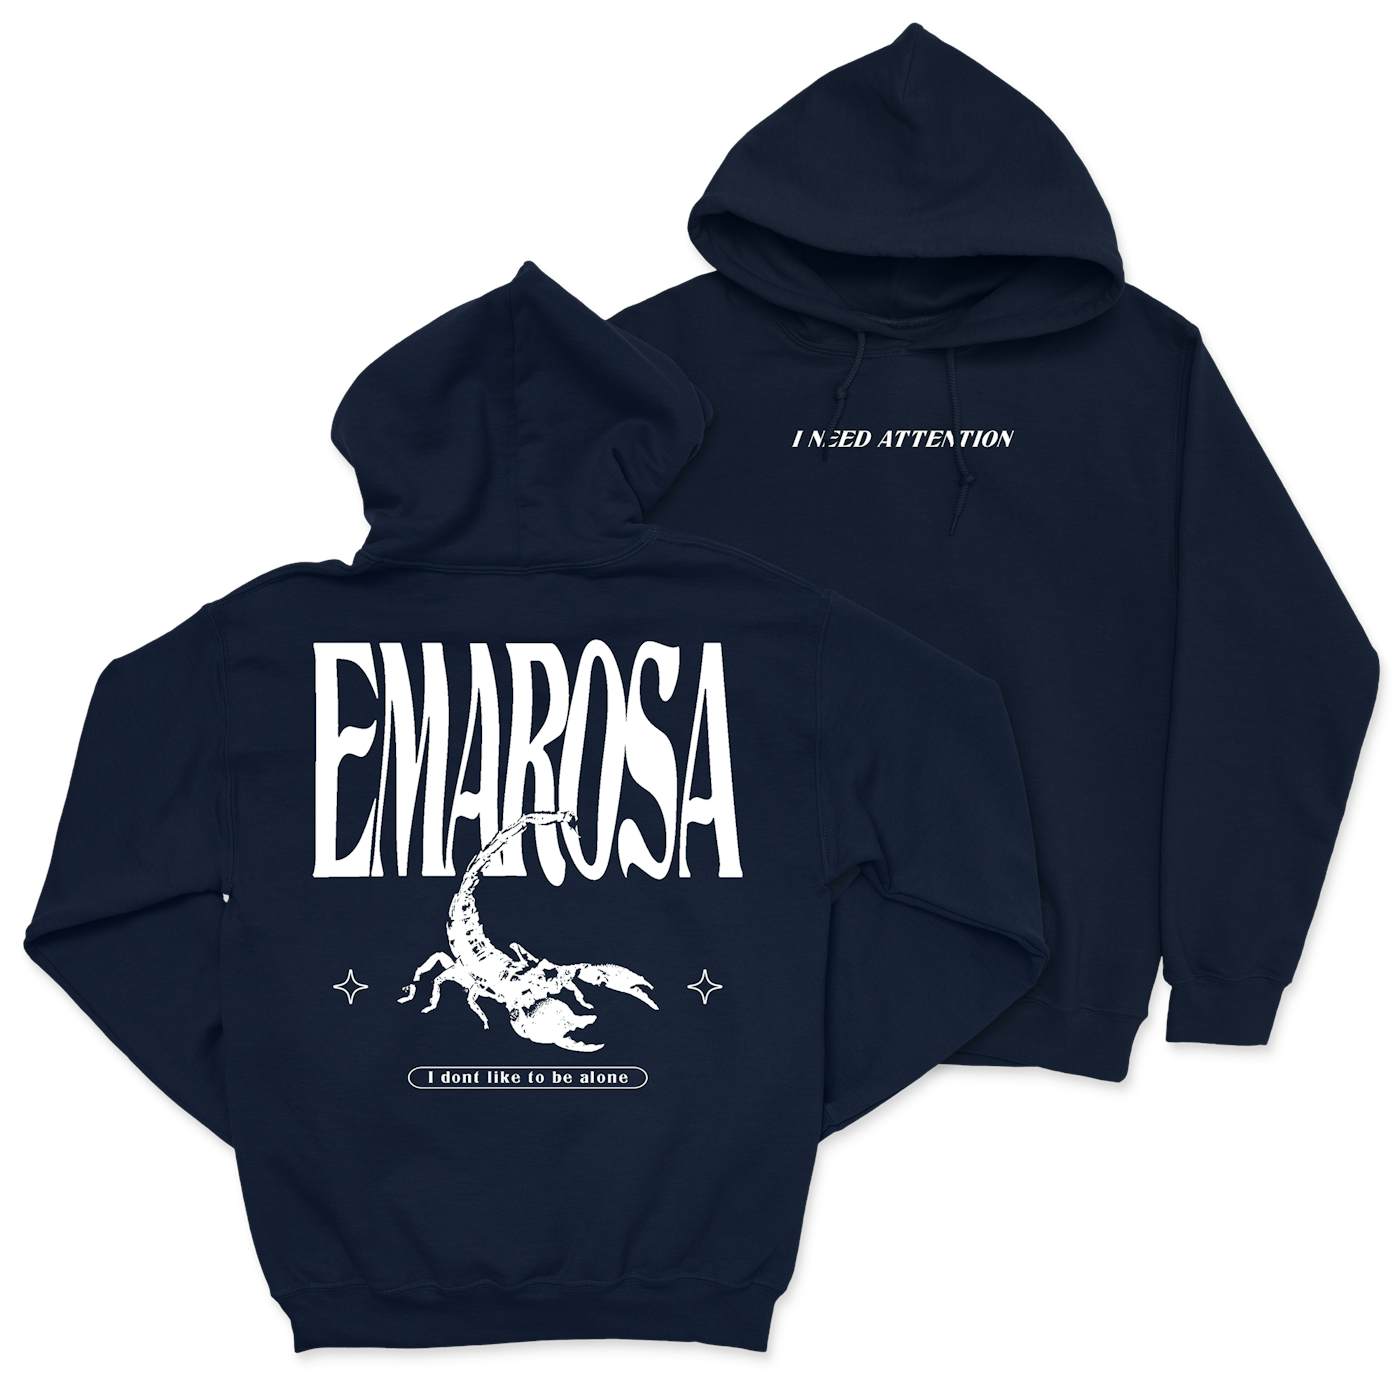 Emarosa - Attention Hoodie - Navy